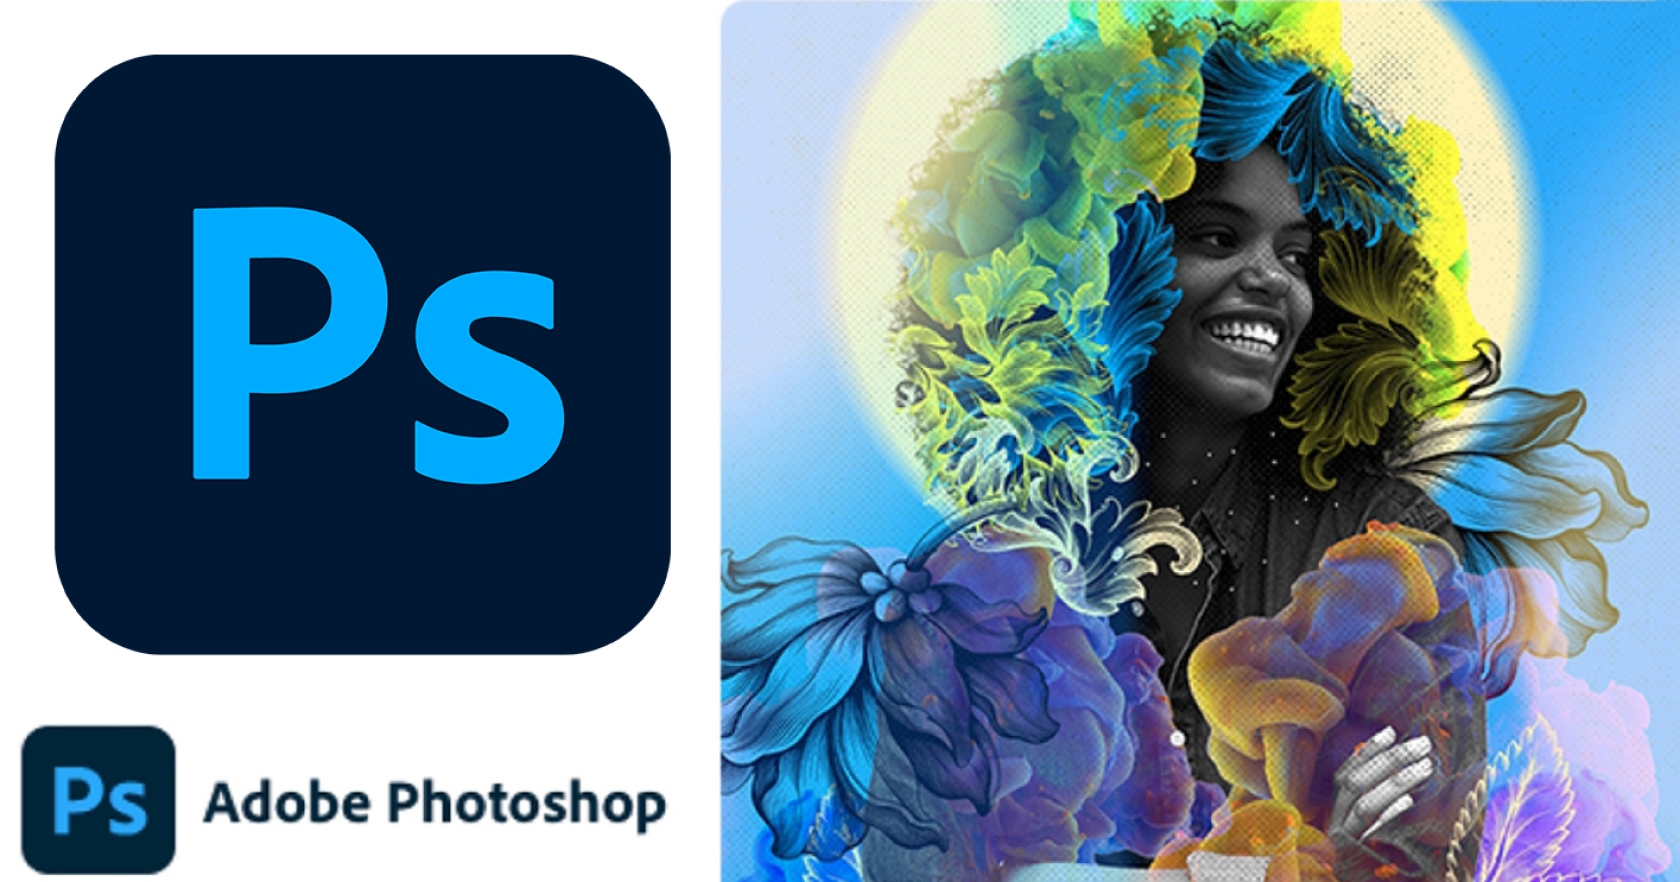 Adobe Photoshop e postproduzione   